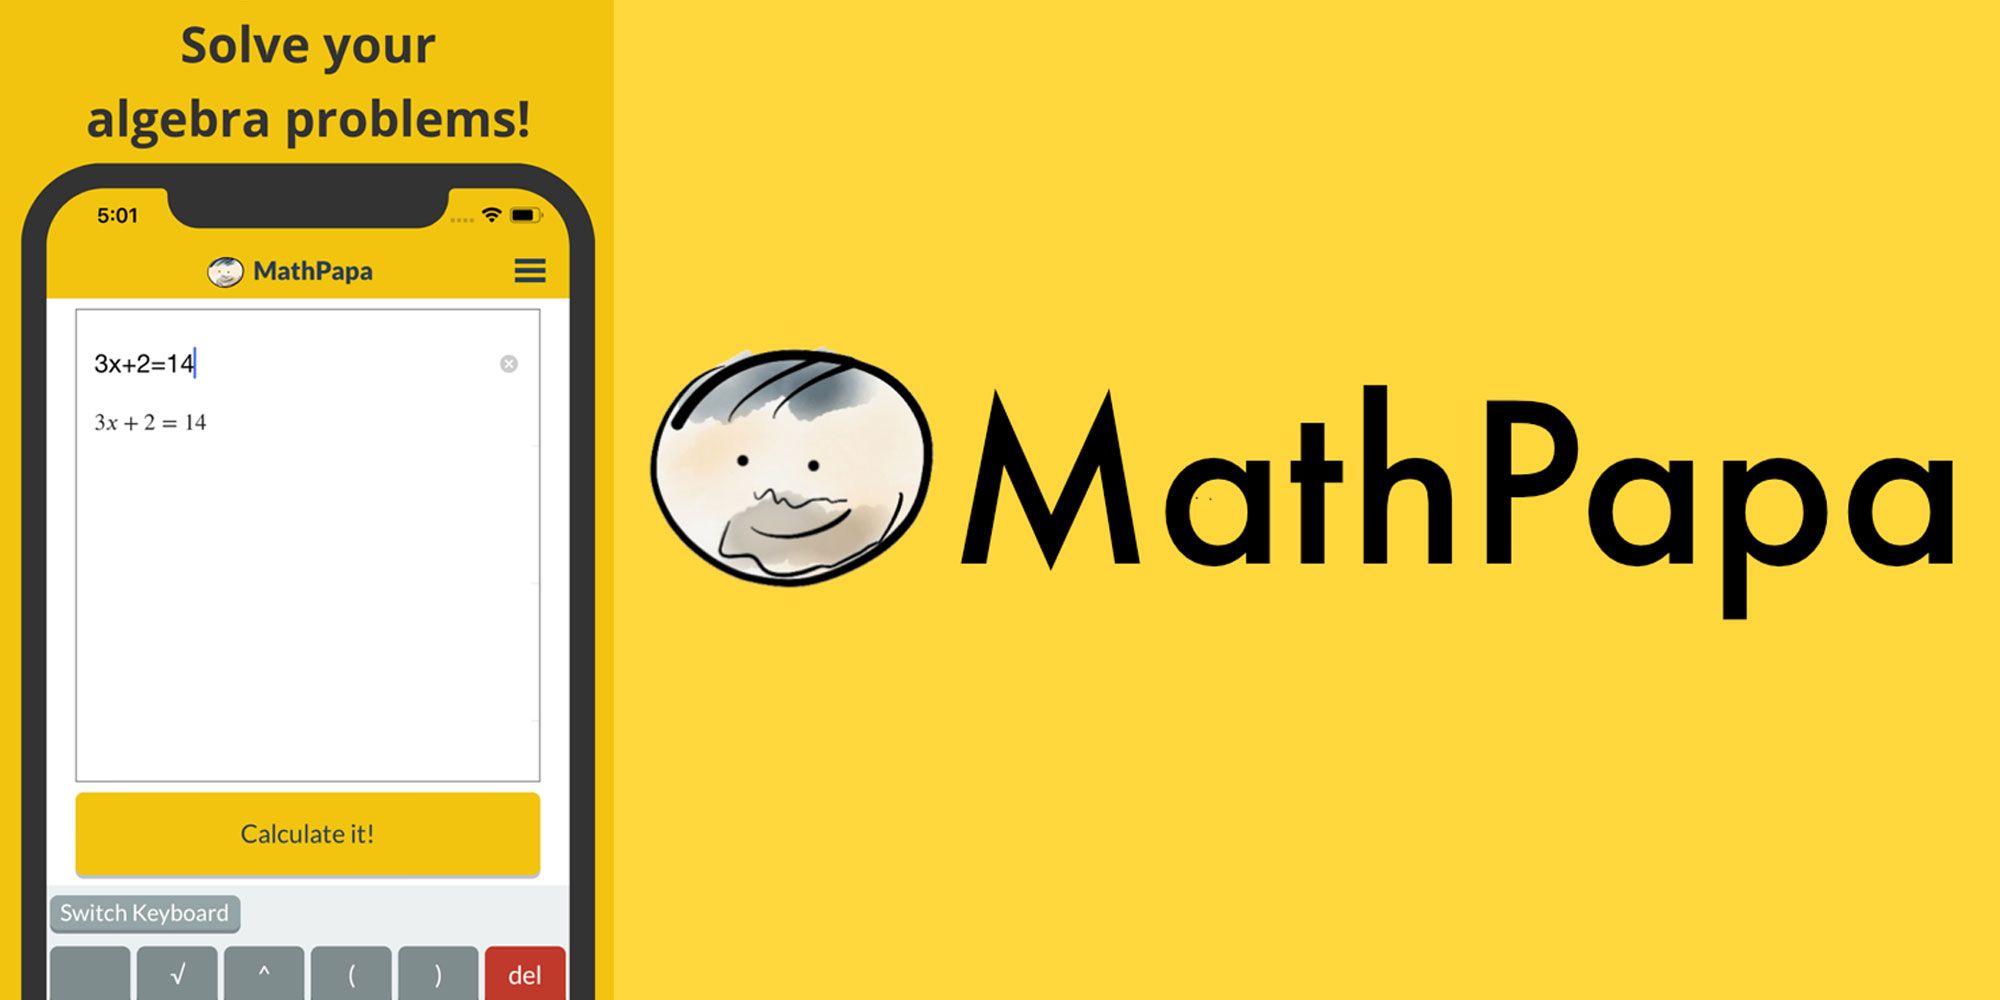 An image of the Mathpapa app